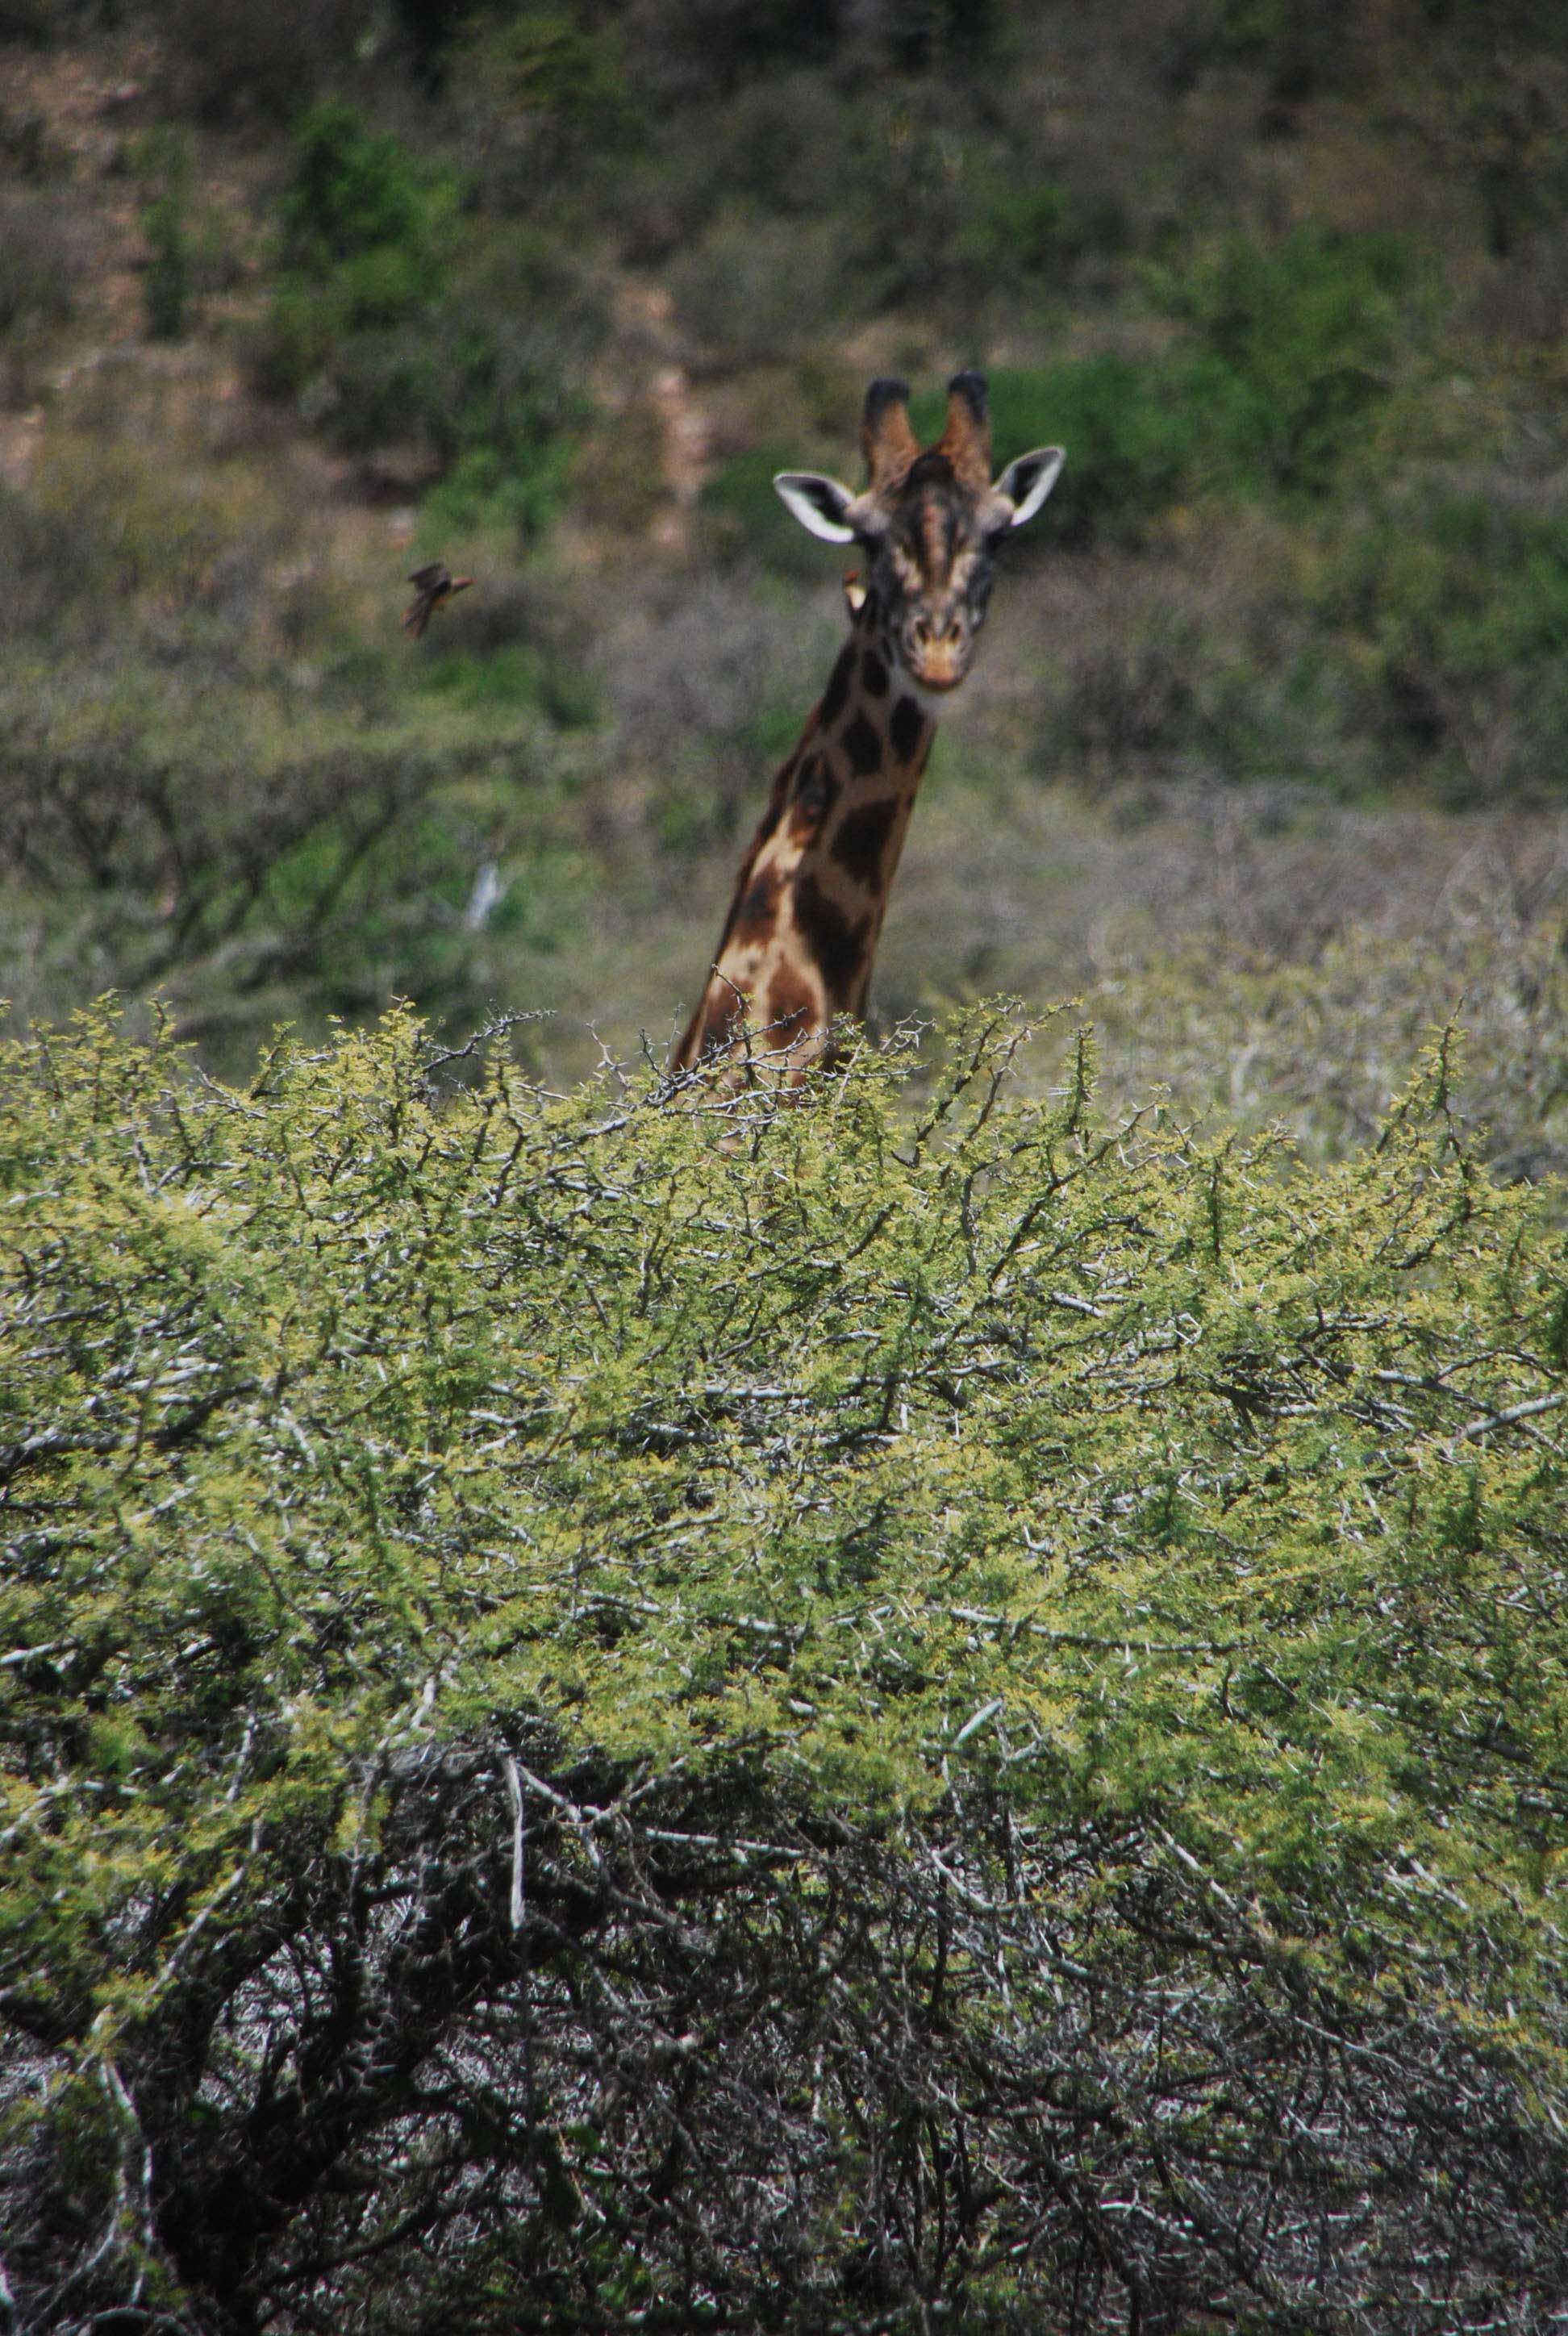 Nuestro primer safari - Regreso al Mara - Kenia (13)